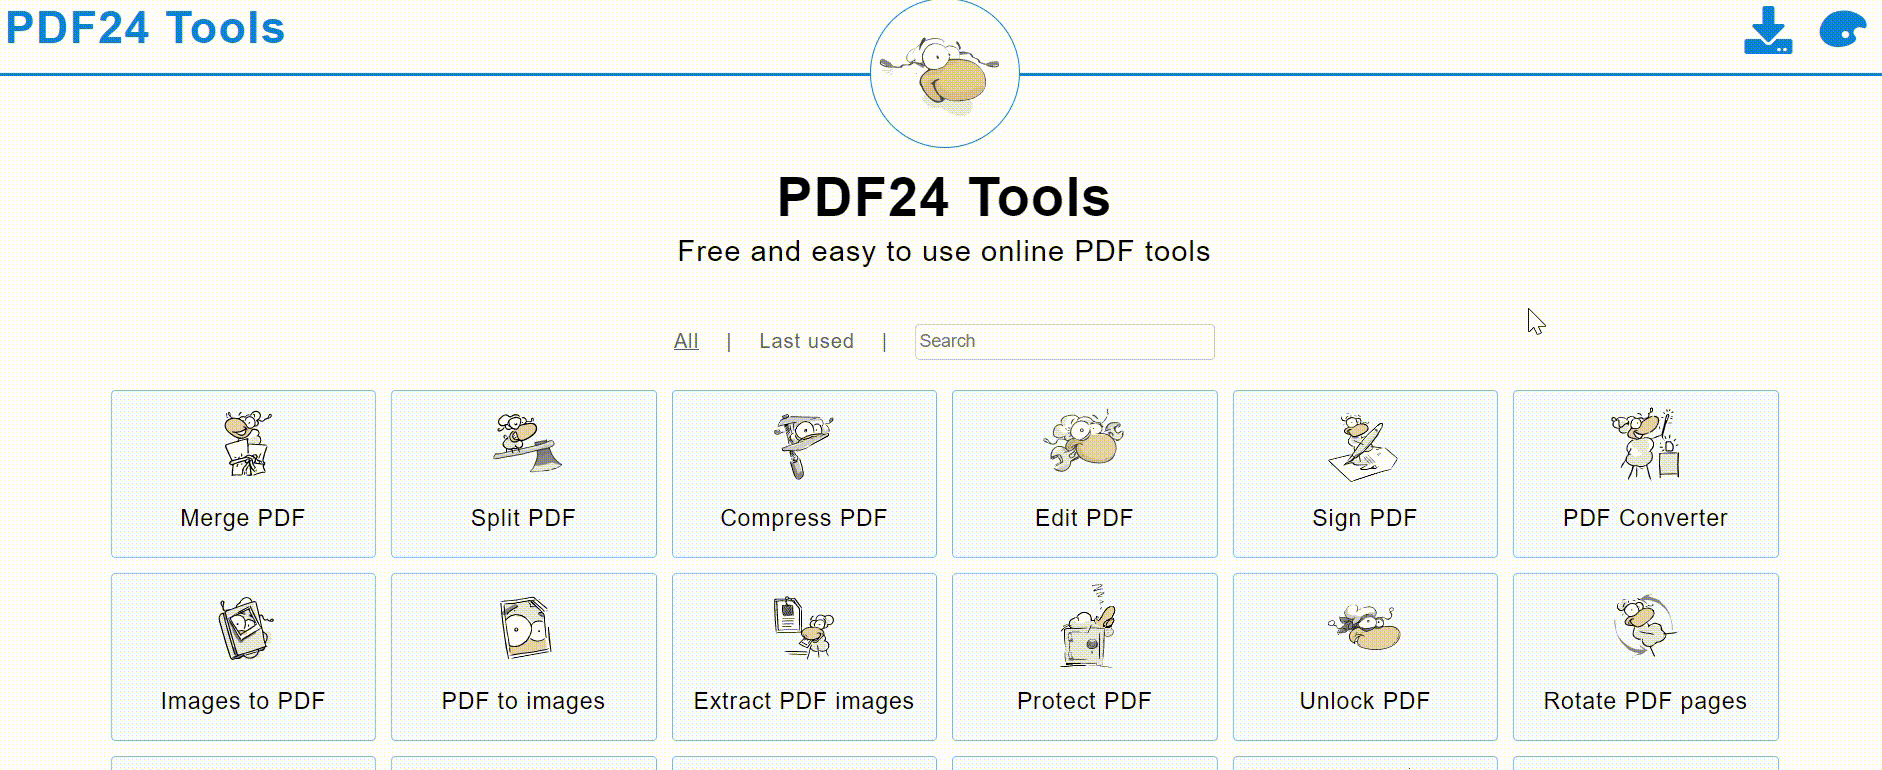 pdf24 tools 